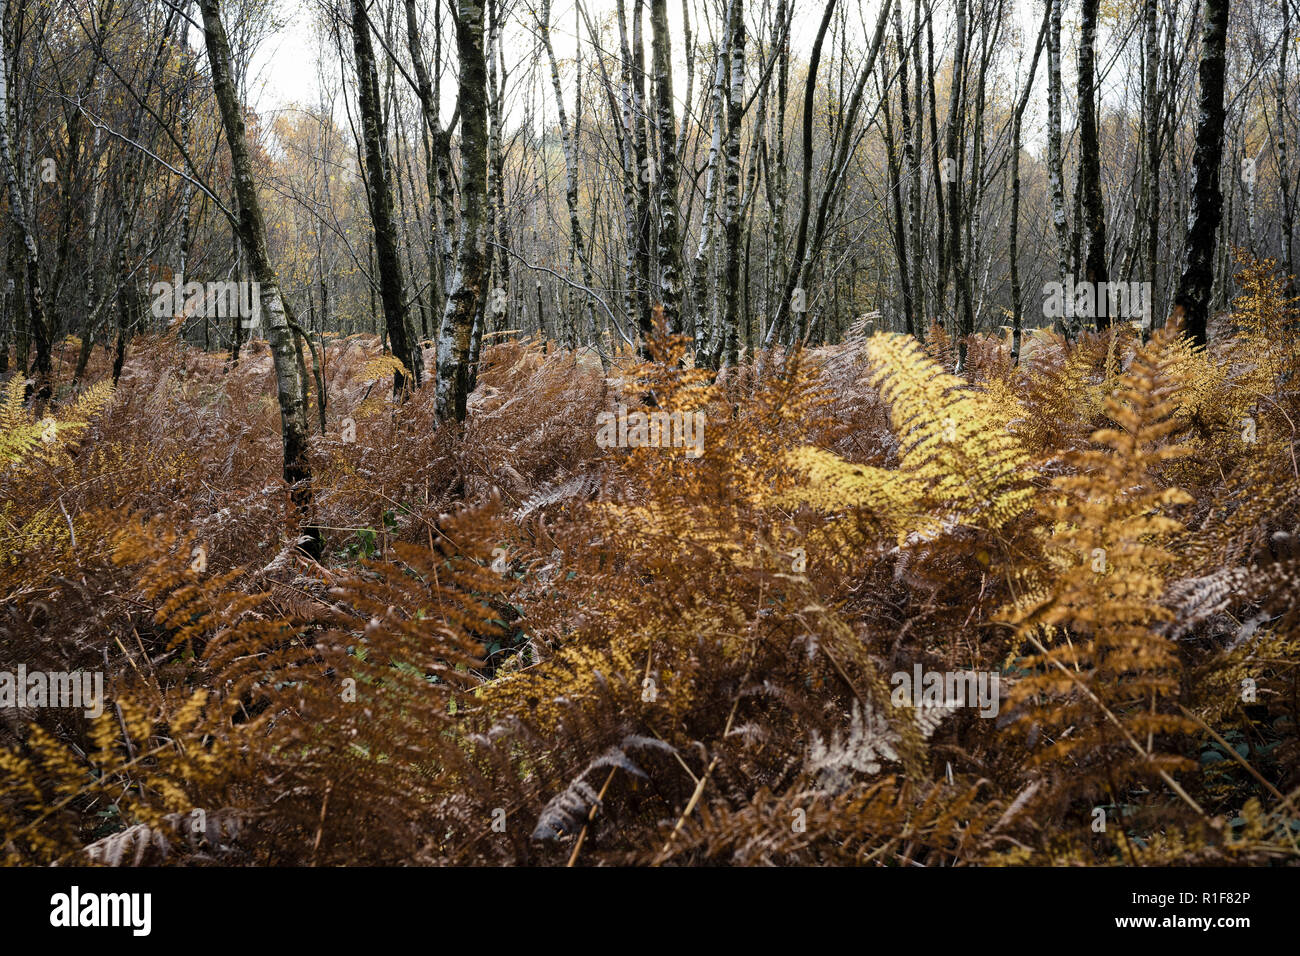 Ferns in undergrowth in forest in Autumn Stock Photo